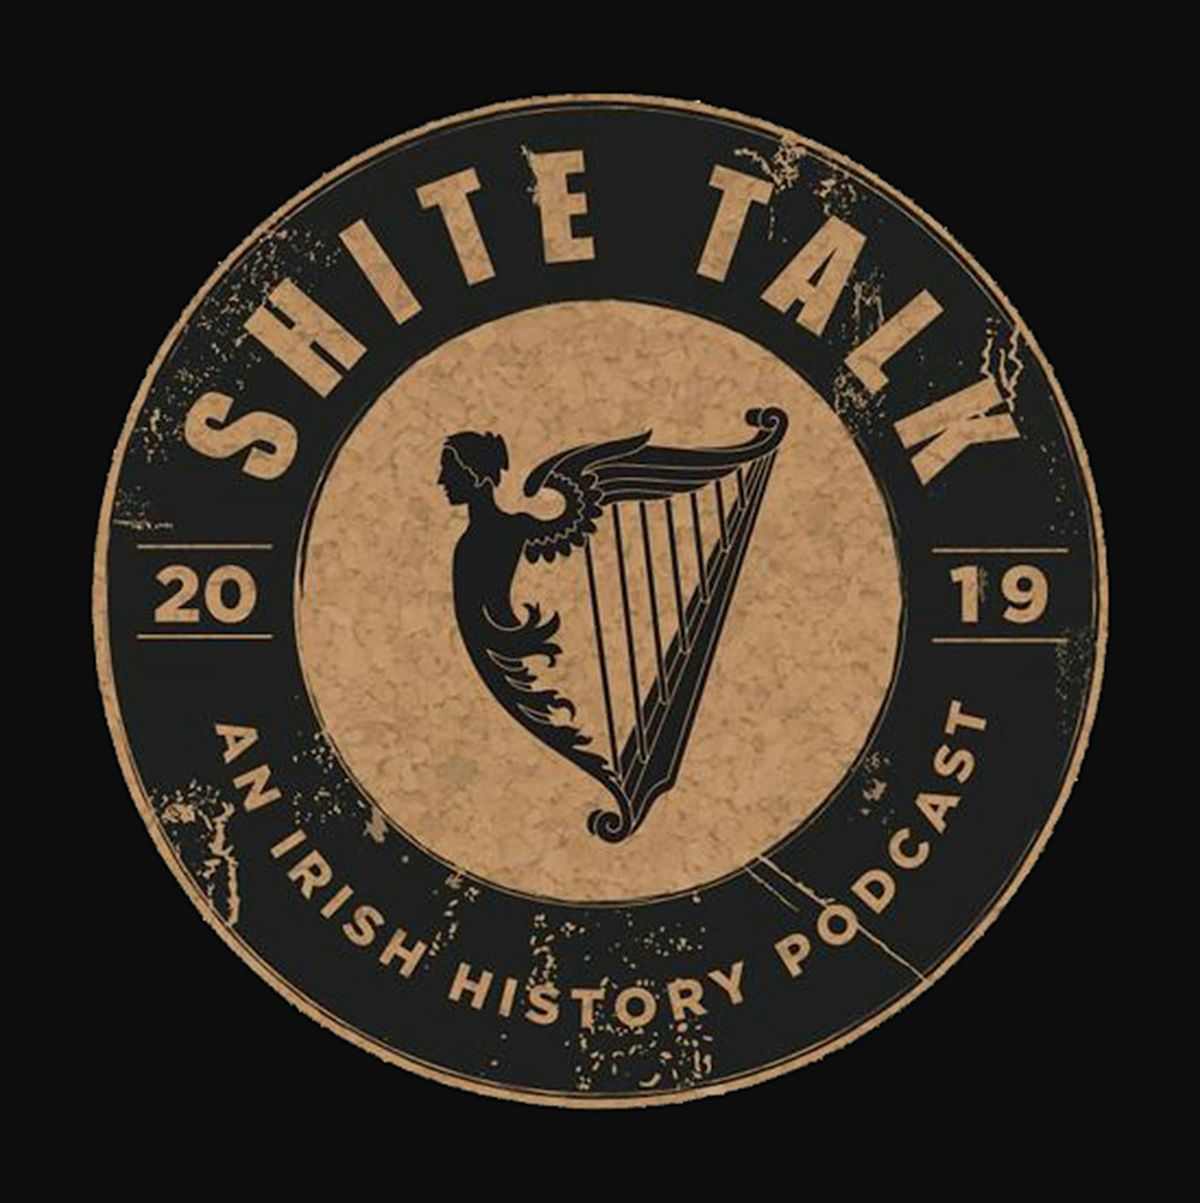 Shite Talk: A Live History Podcast - Cork